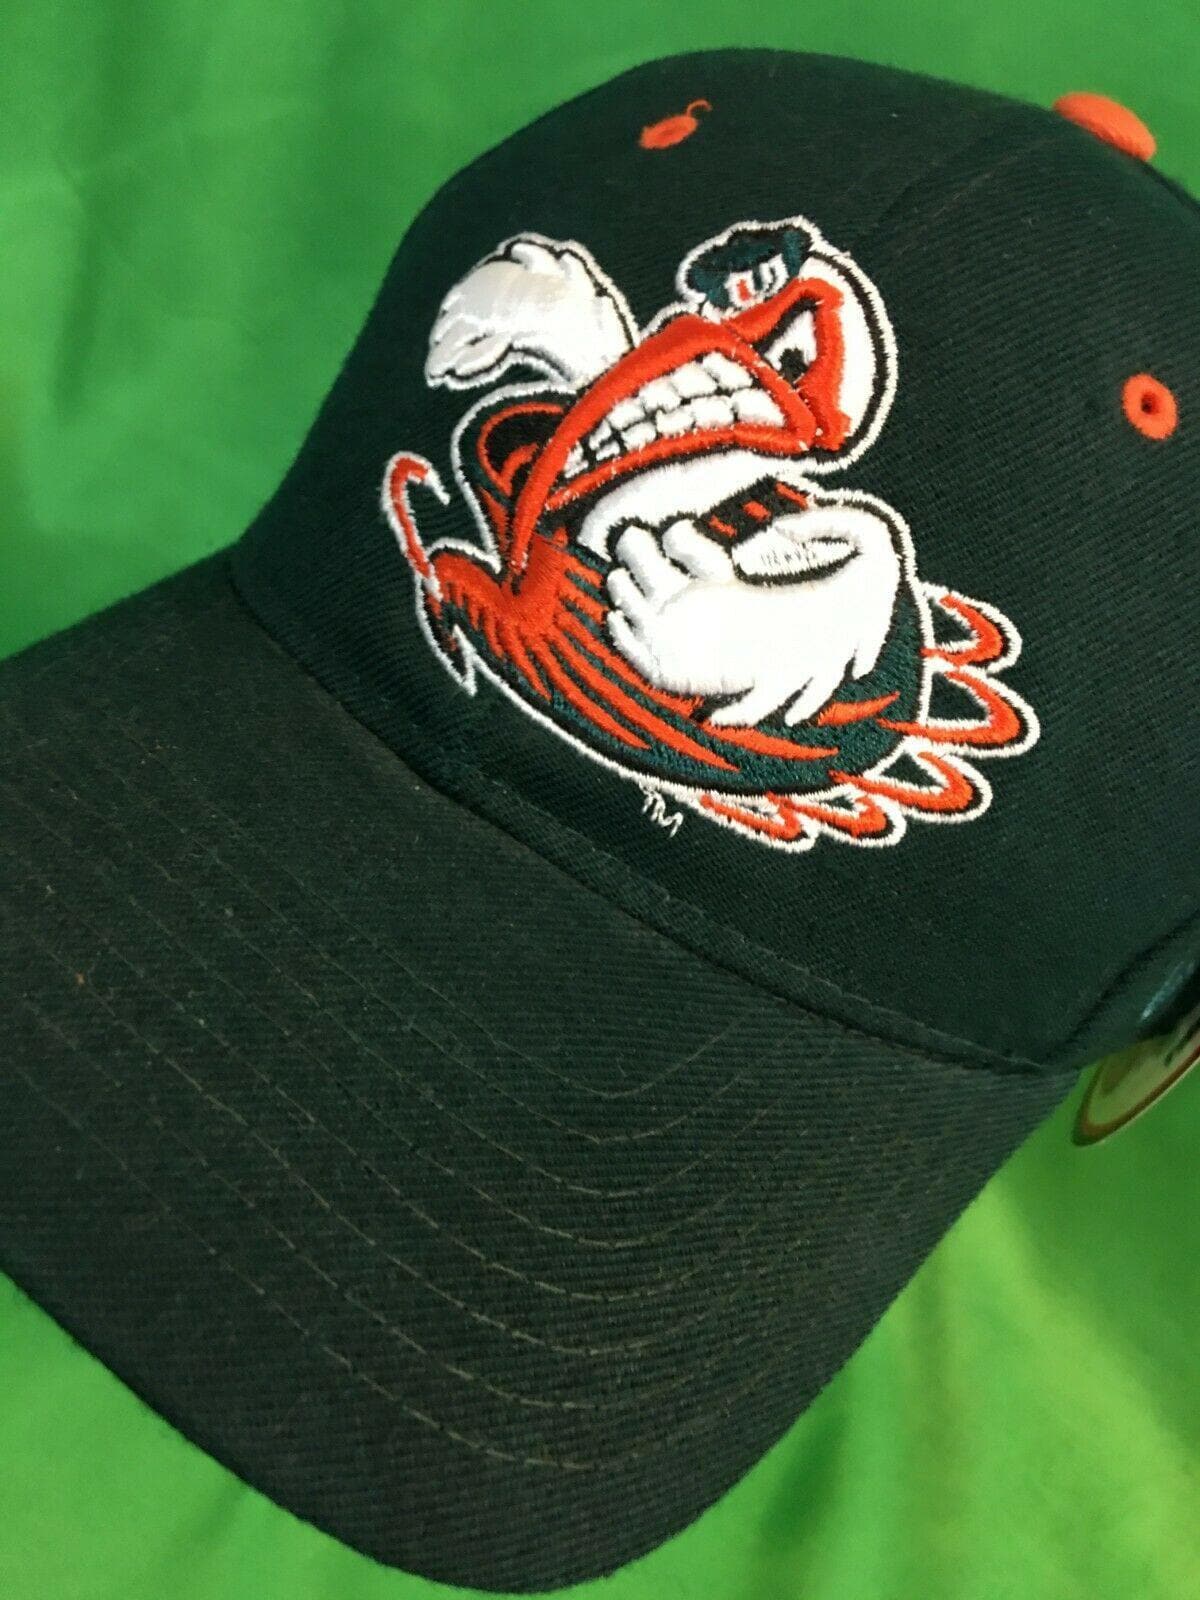 NCAA Miami Hurricanes Zephyr Hat/Cap Size 7 NWT